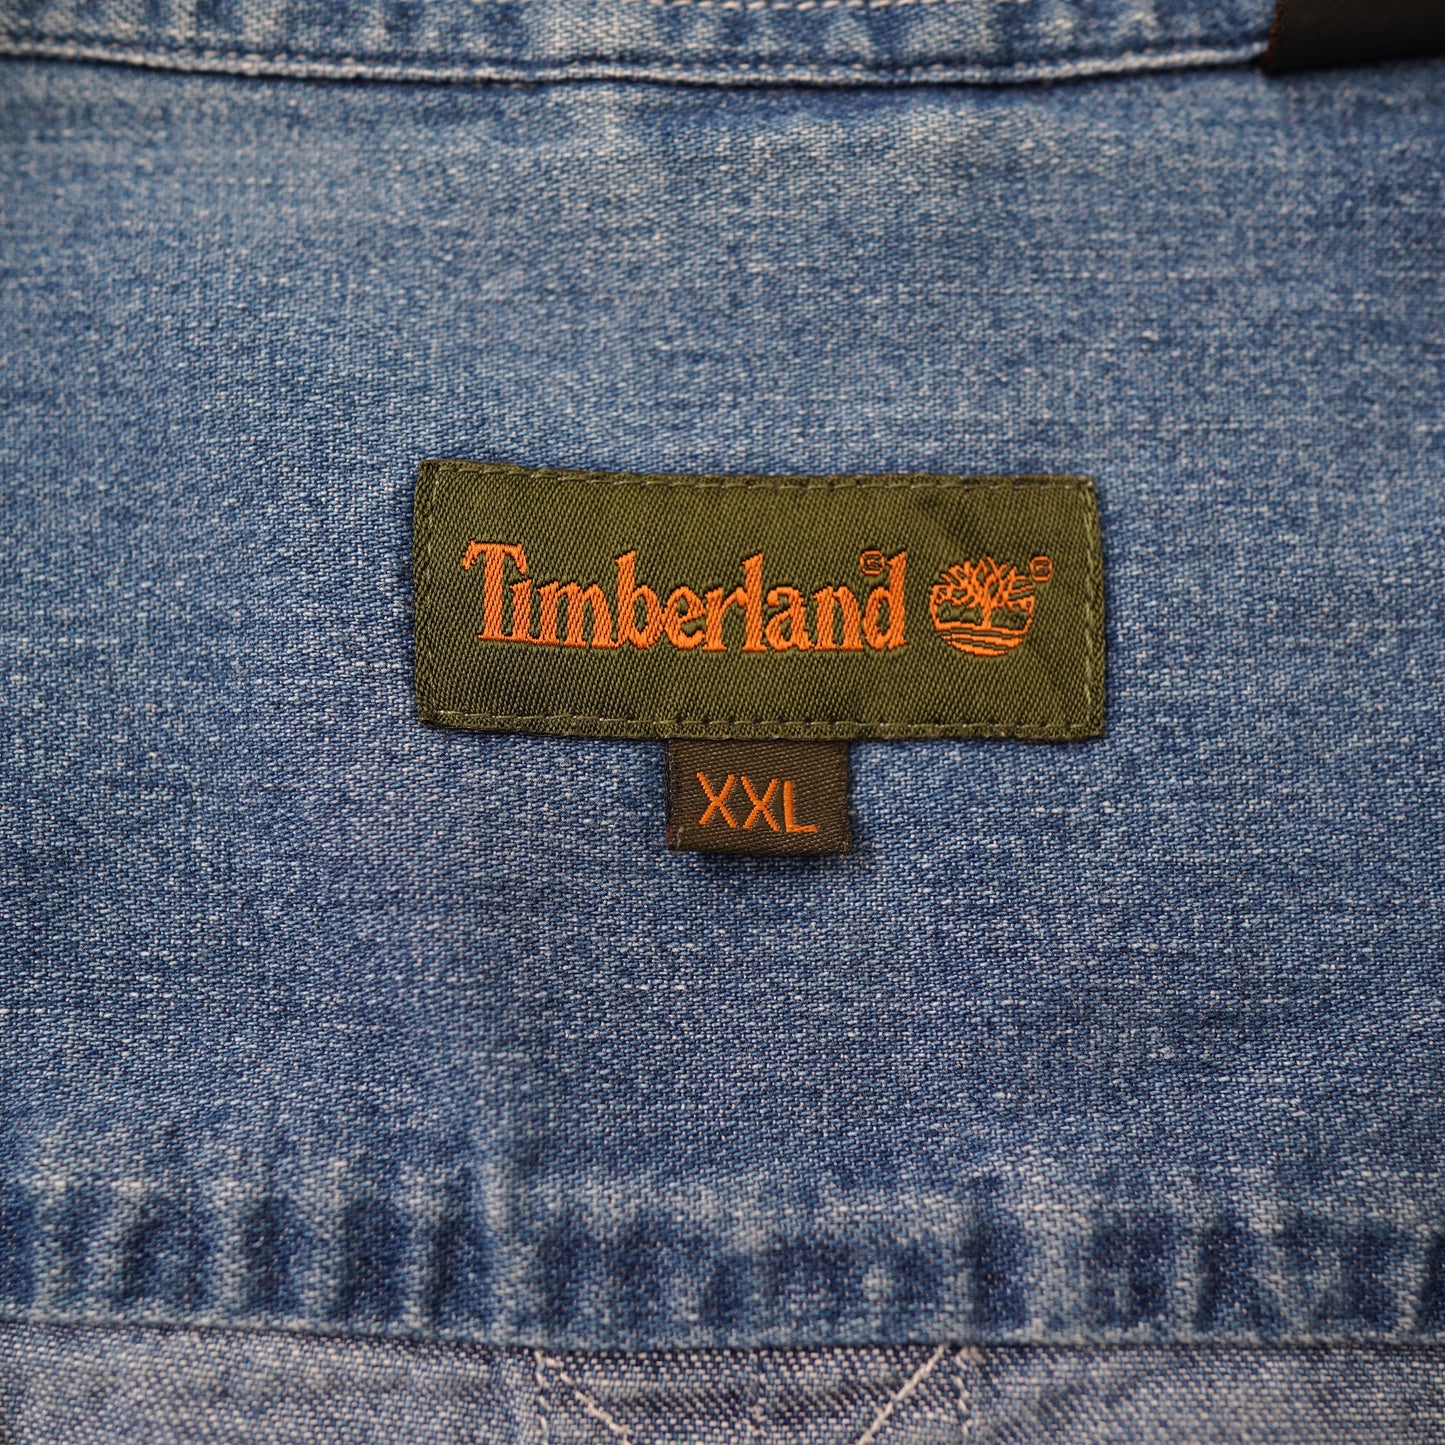 Timberland denim shirt